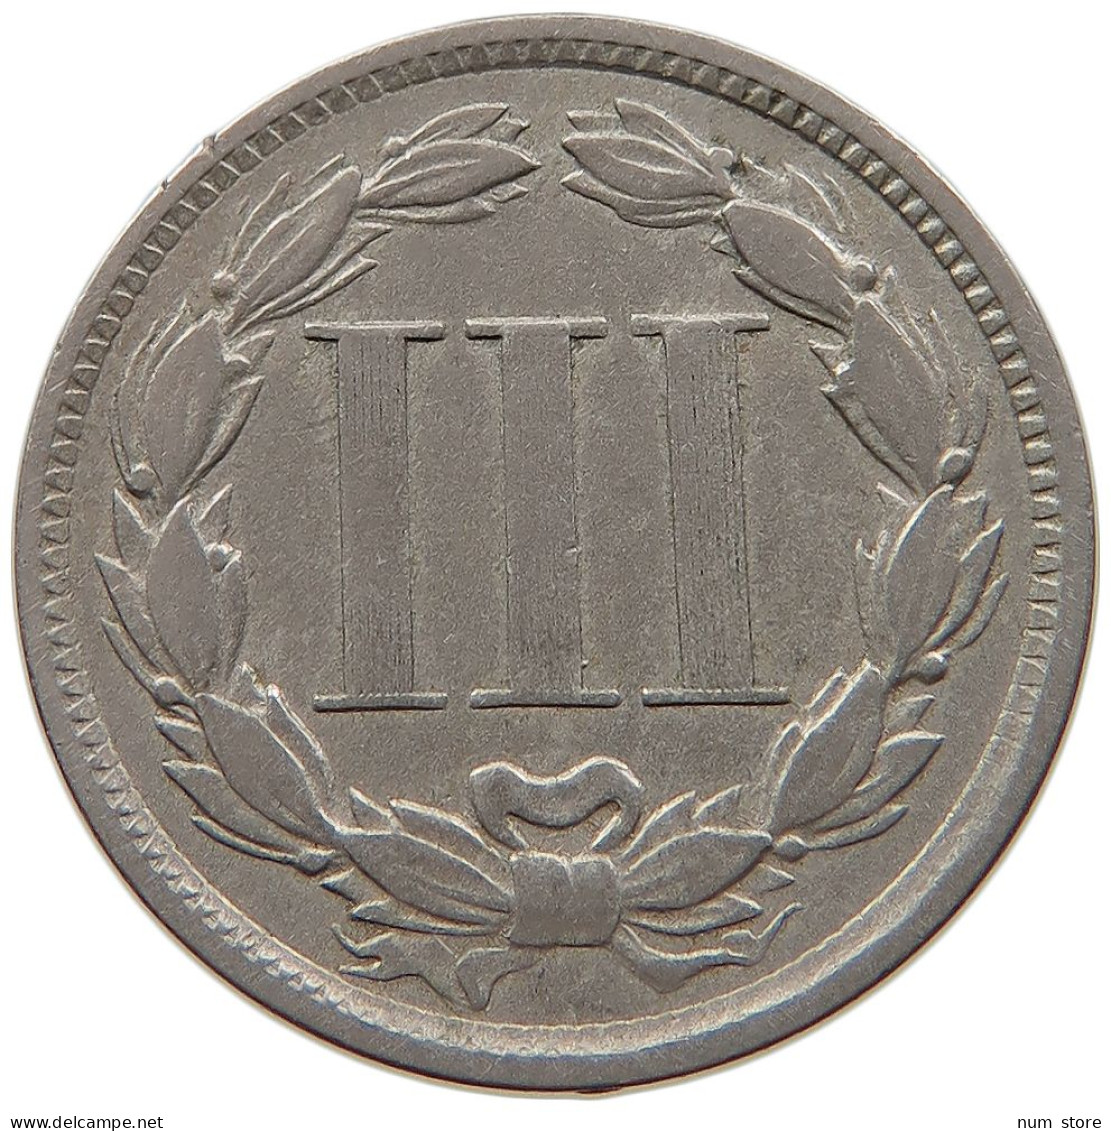 UNITED STATES OF AMERICA THREE CENT NICKEL 1867  #t143 0369 - 2, 3 & 20 Cent